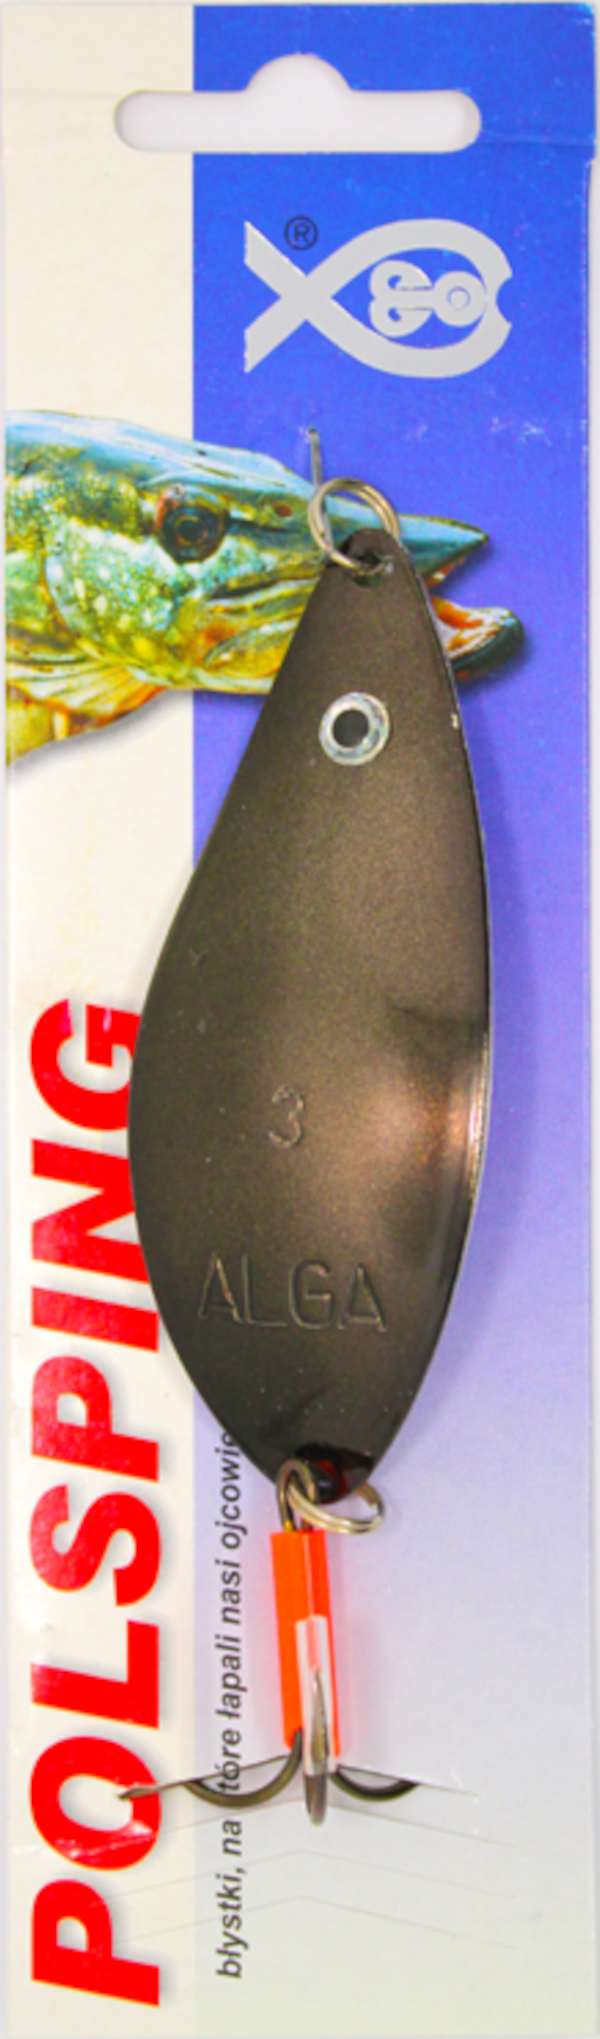 Cuillère Polsping Alga Lepel - Nickel Titanium 12cm 30g